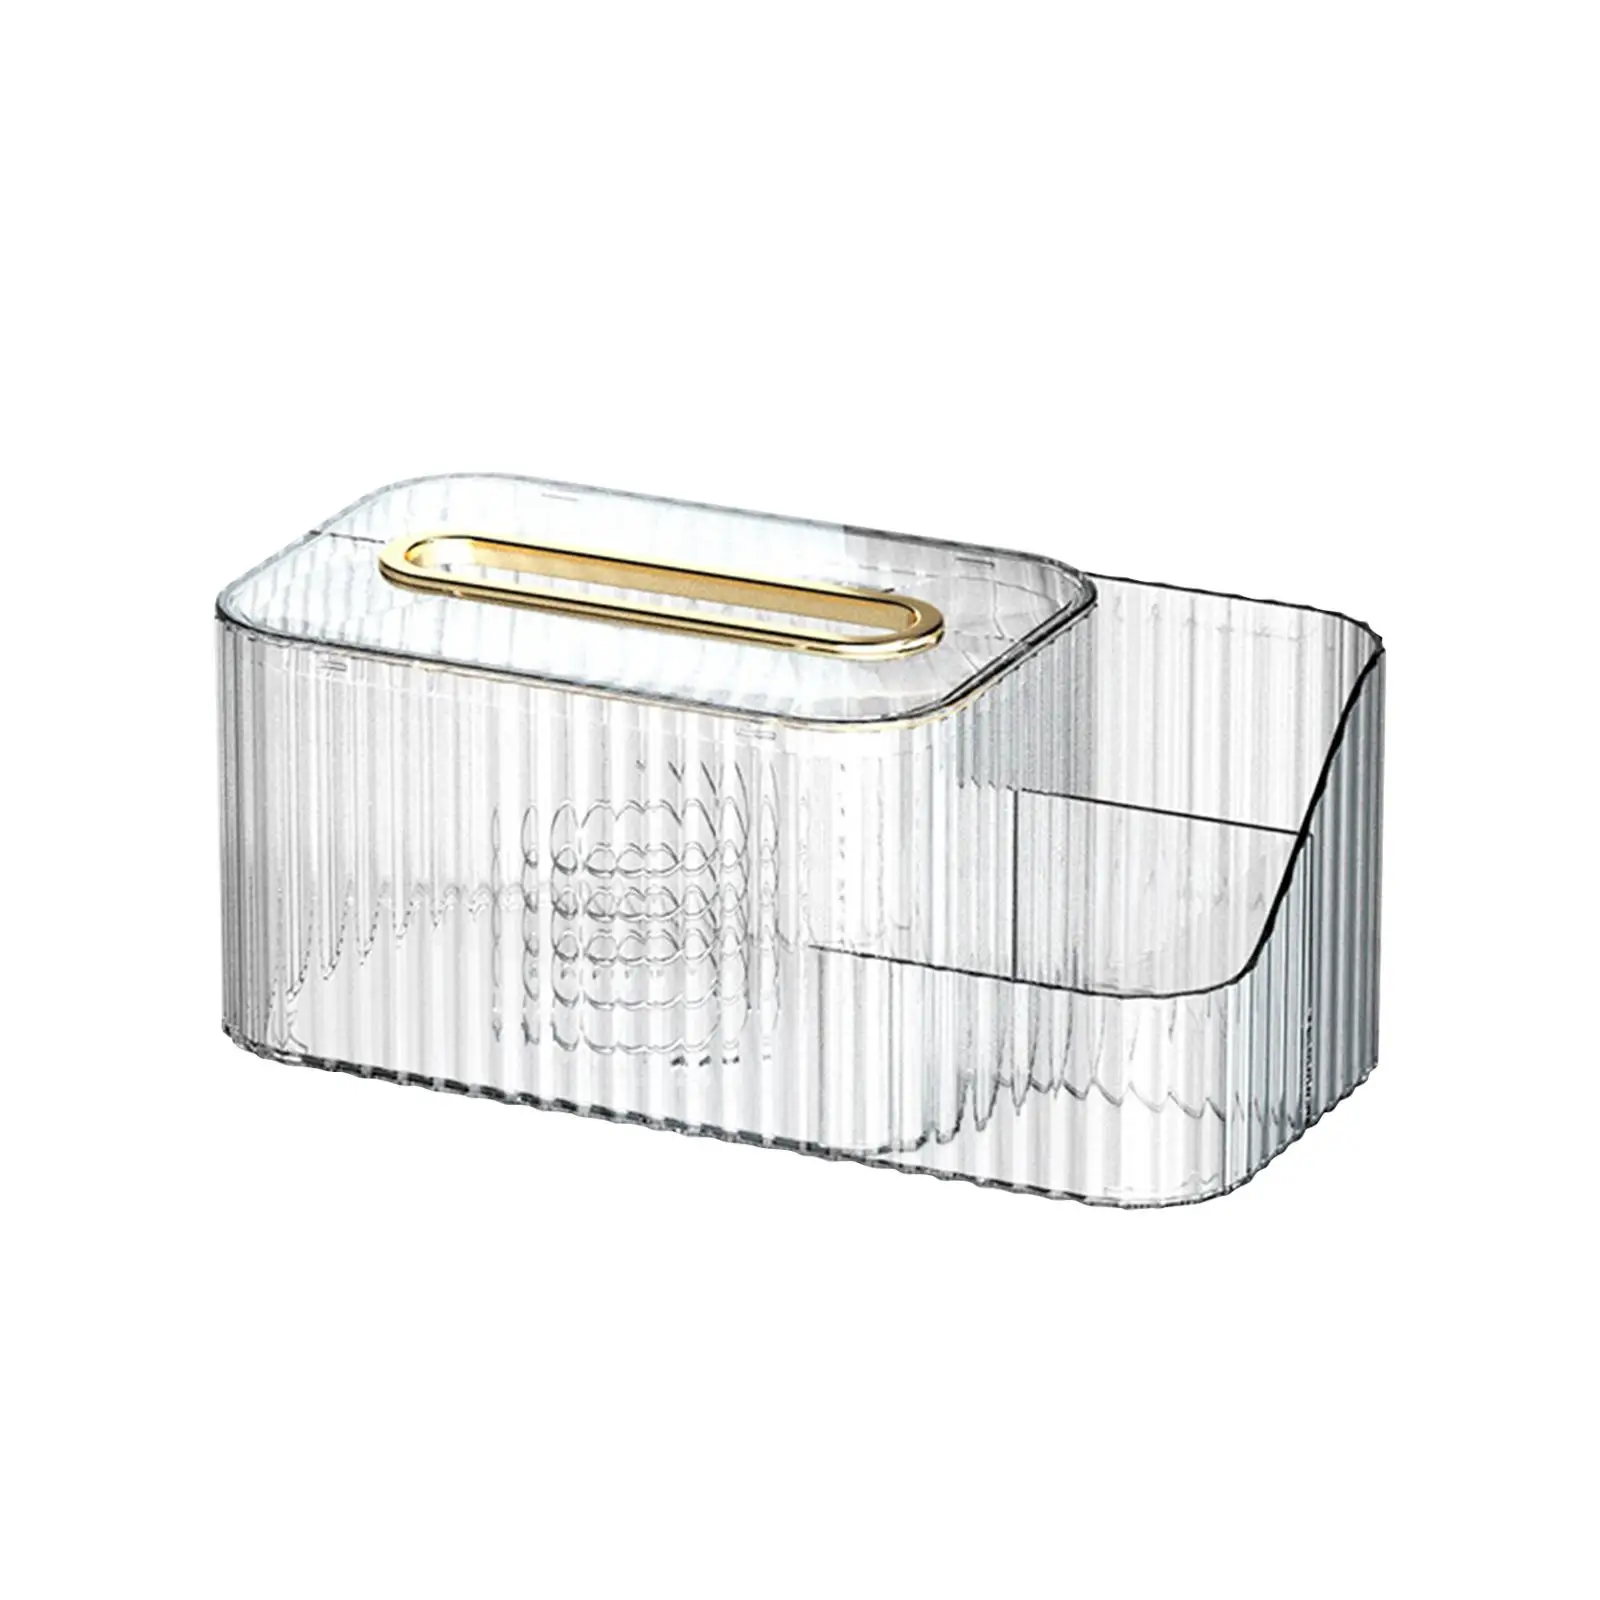 Multifunctional Tissue Box Holder with Vanity Organizer Tissue Storage Box for Bathroom Vanity Countertops Desktop Home Office